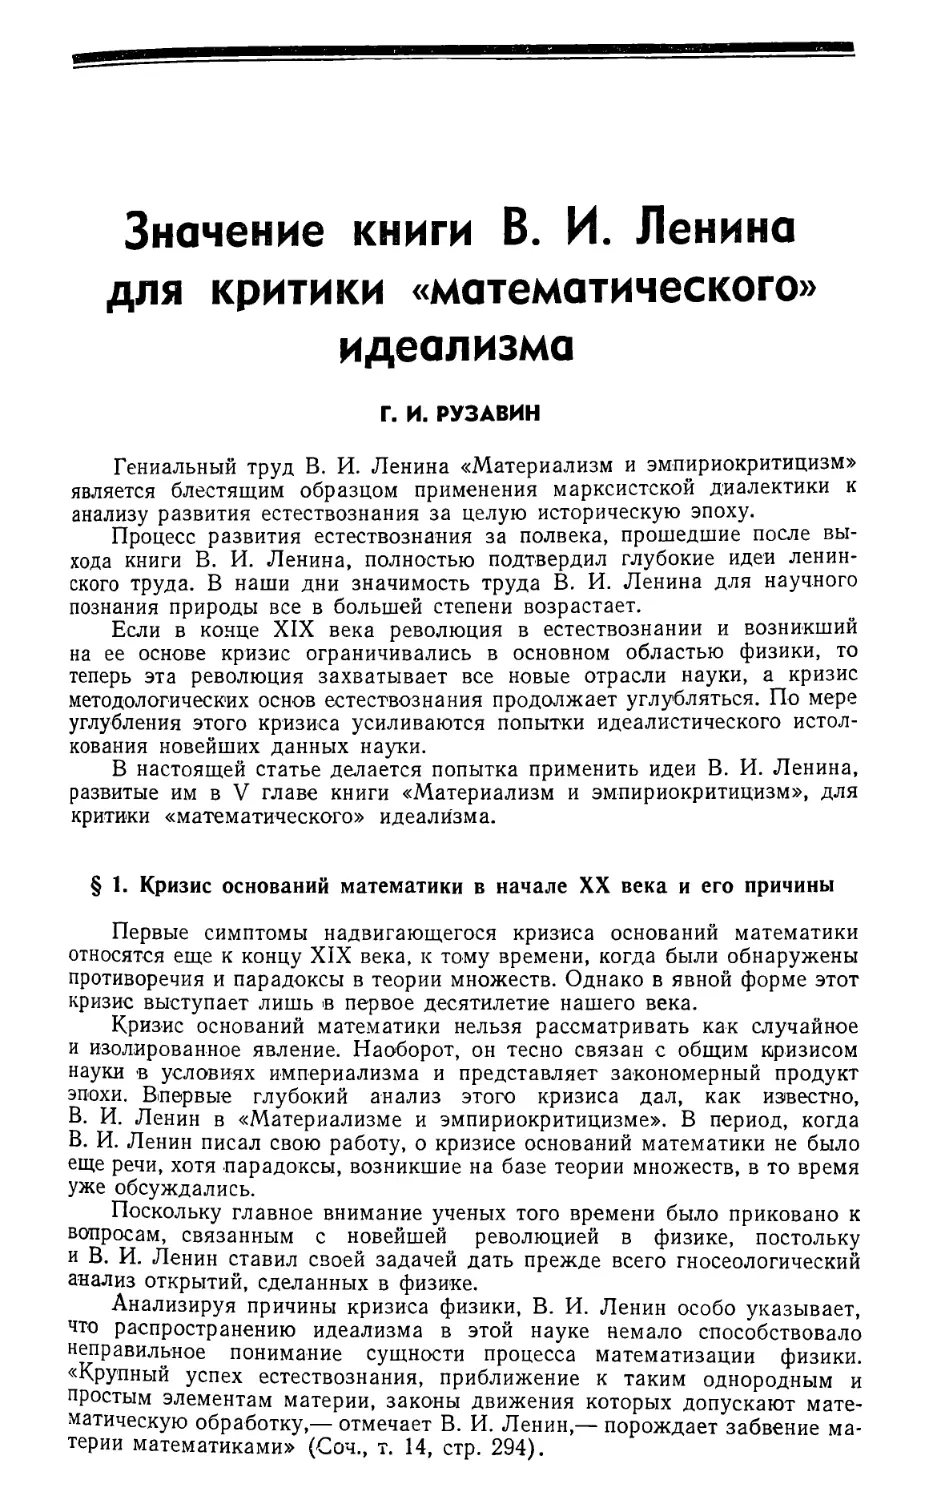 Г. И. Рузавин — Значение книги В. И. Ленина для критики «математического» идеализма